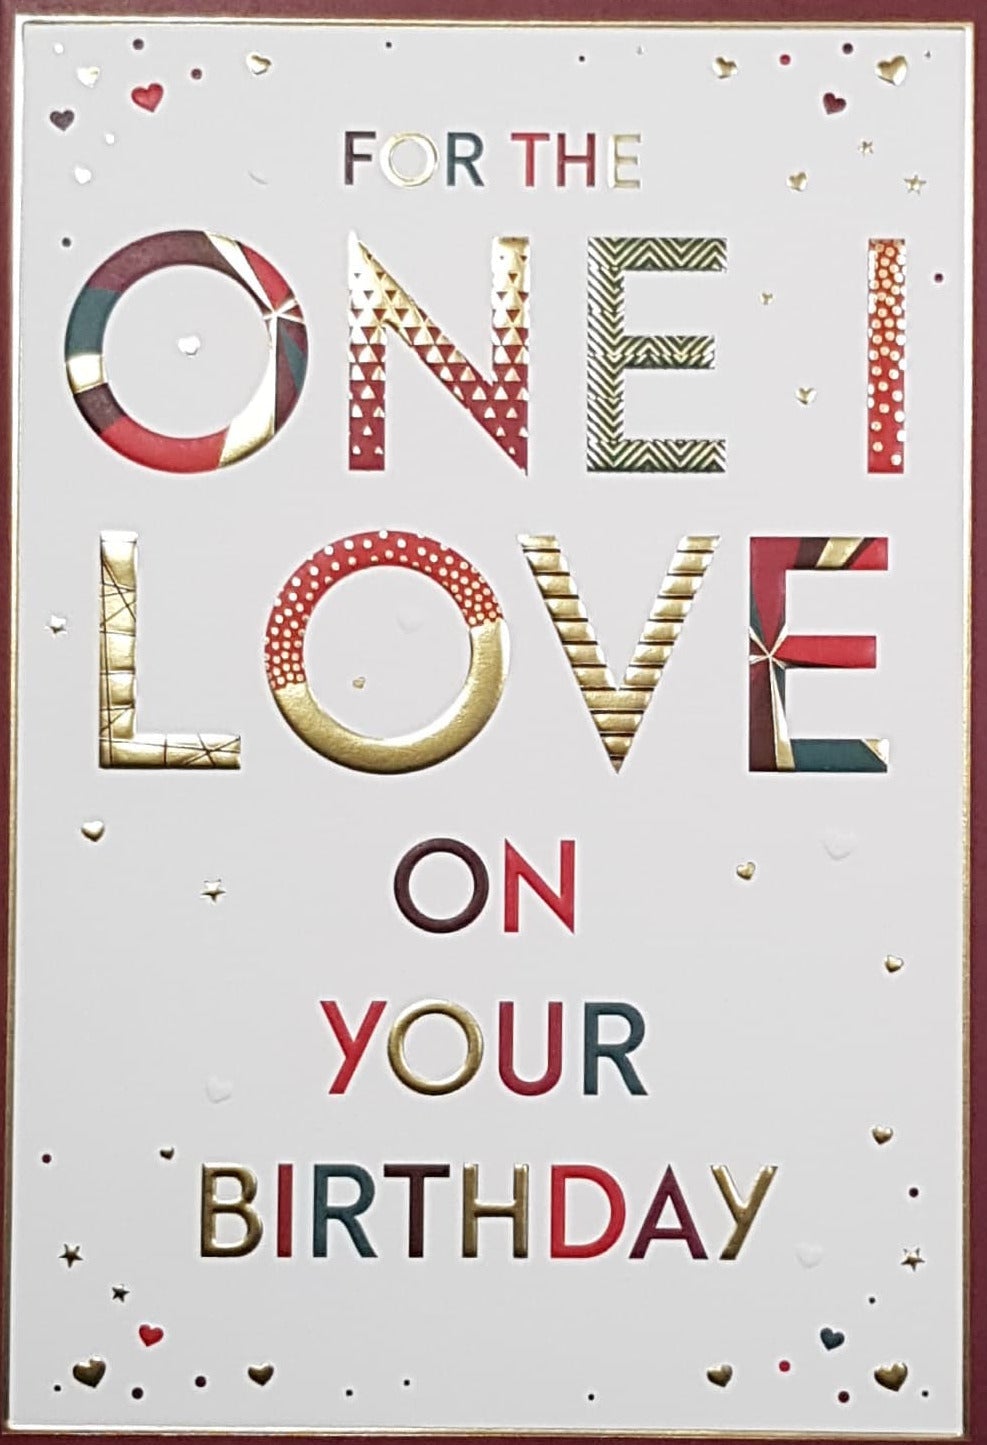 Birthday Card - One I Love / A Multi-Pattern Font & A Maroon Border